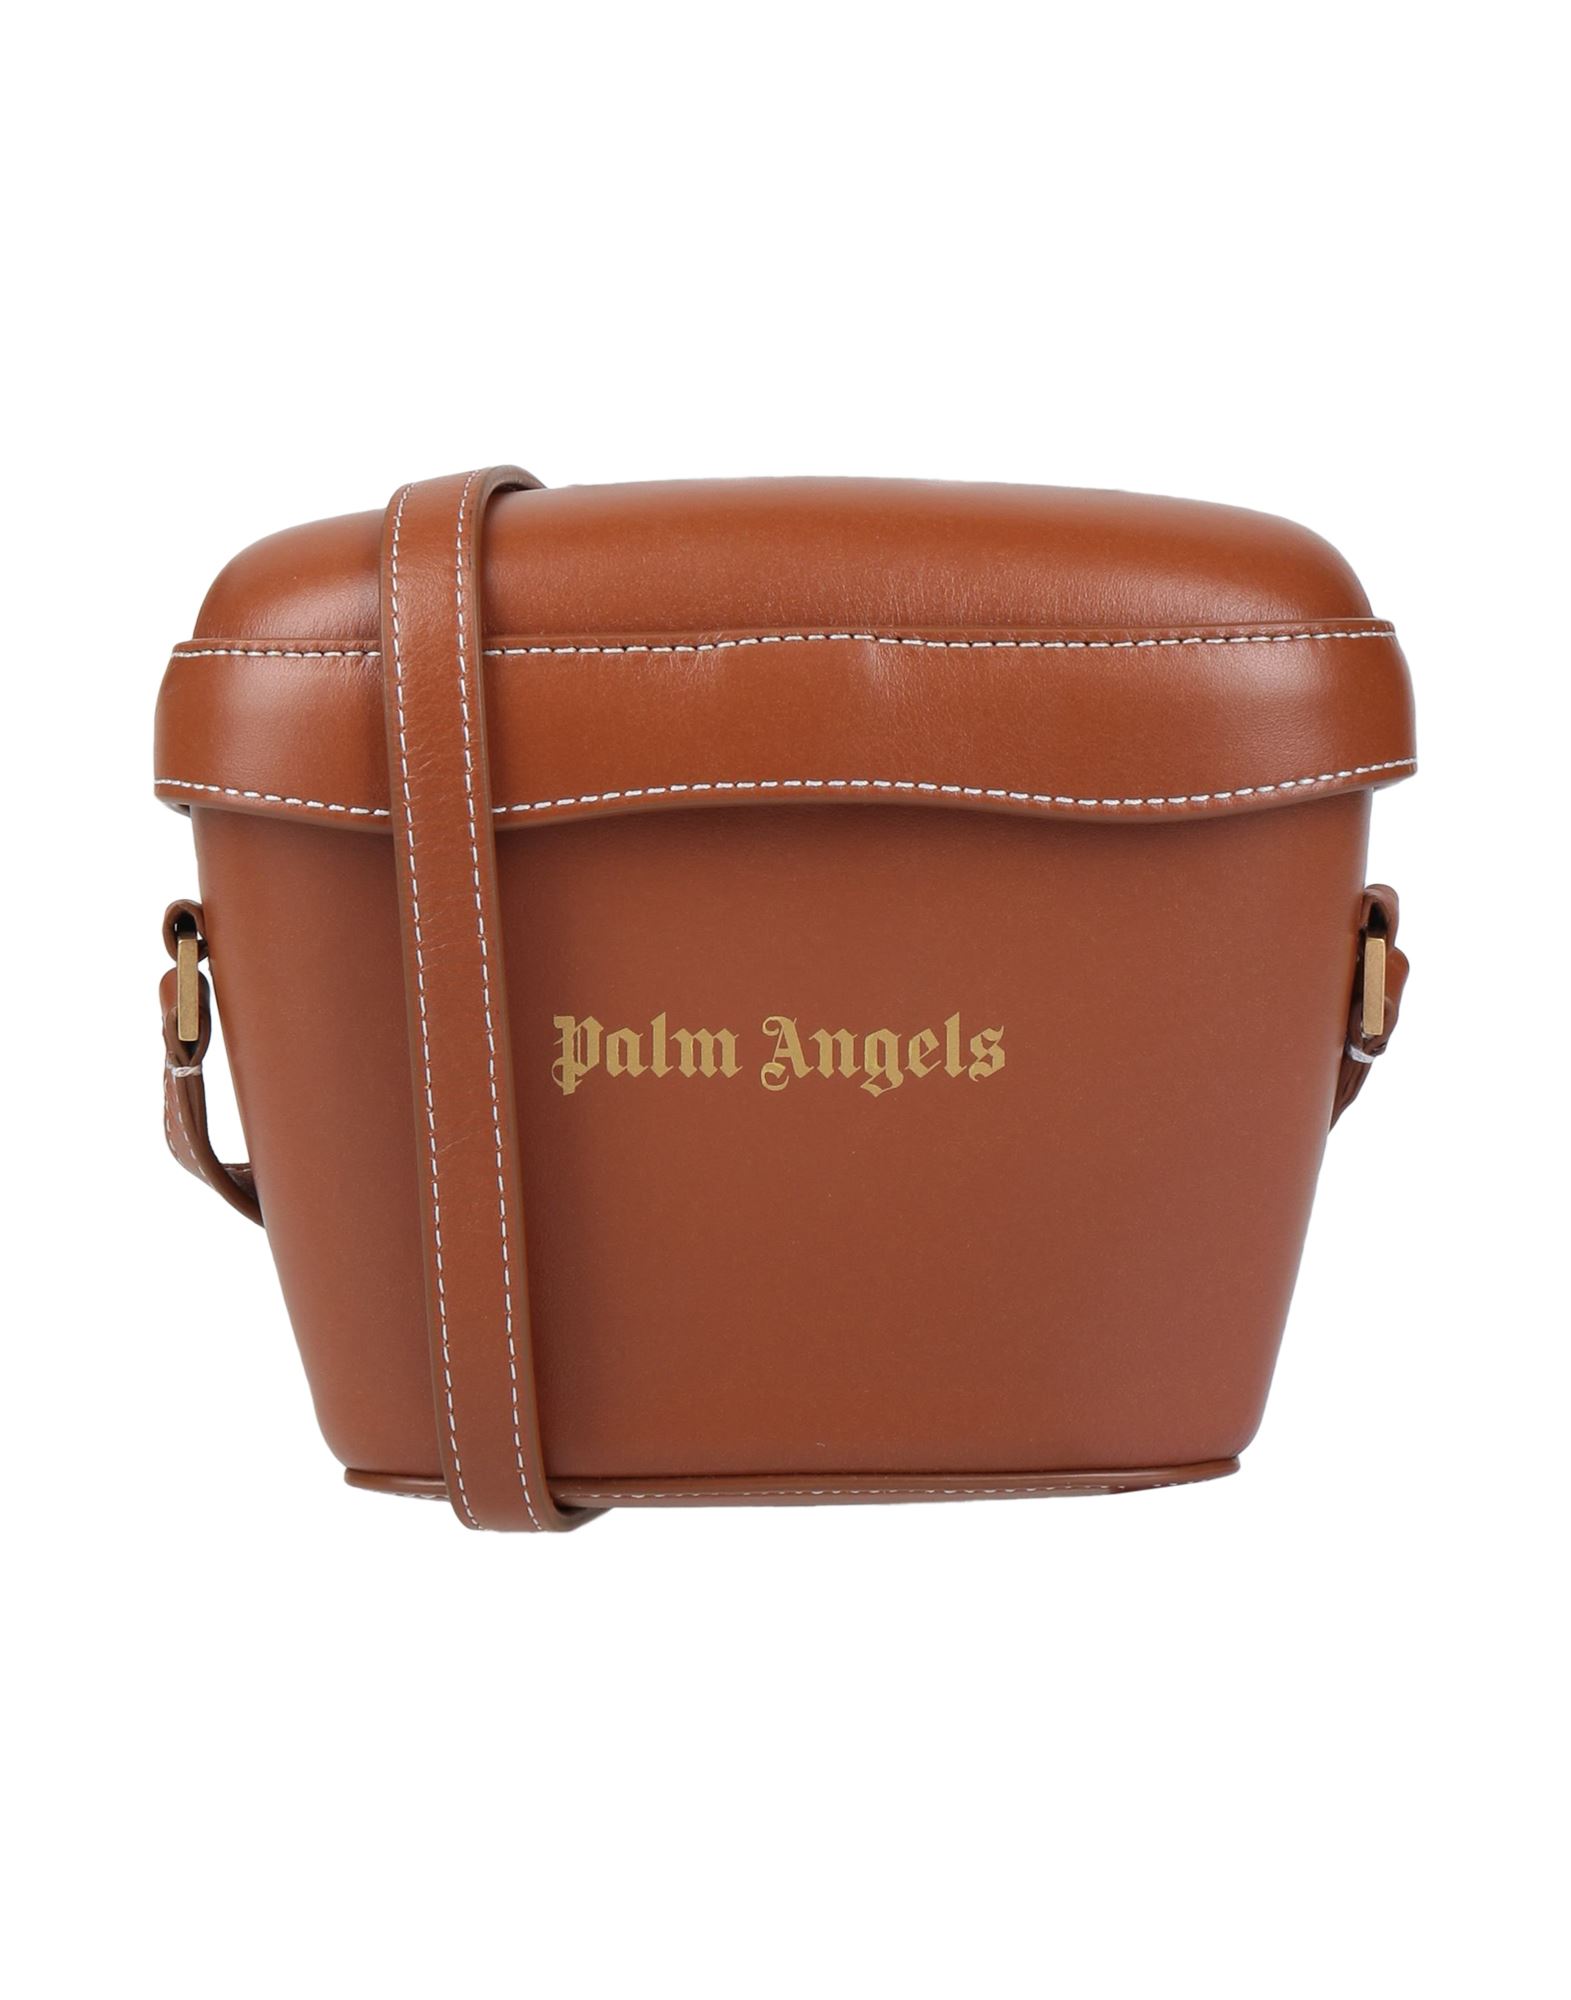 Palm Angels Handbags In Tan